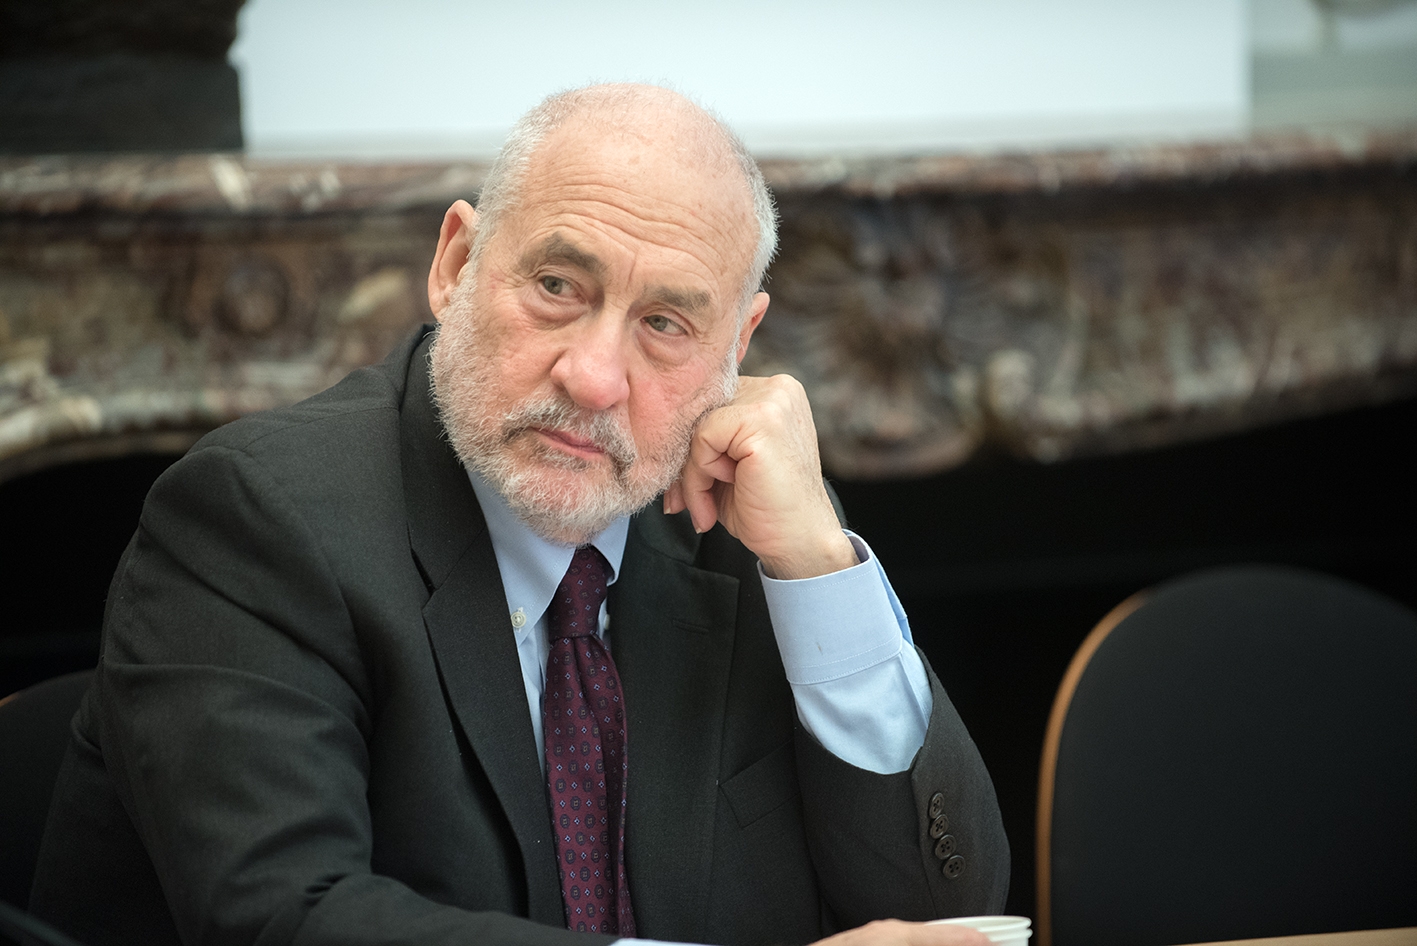 Réunion de travail de la Commission Stern-Stiglitz